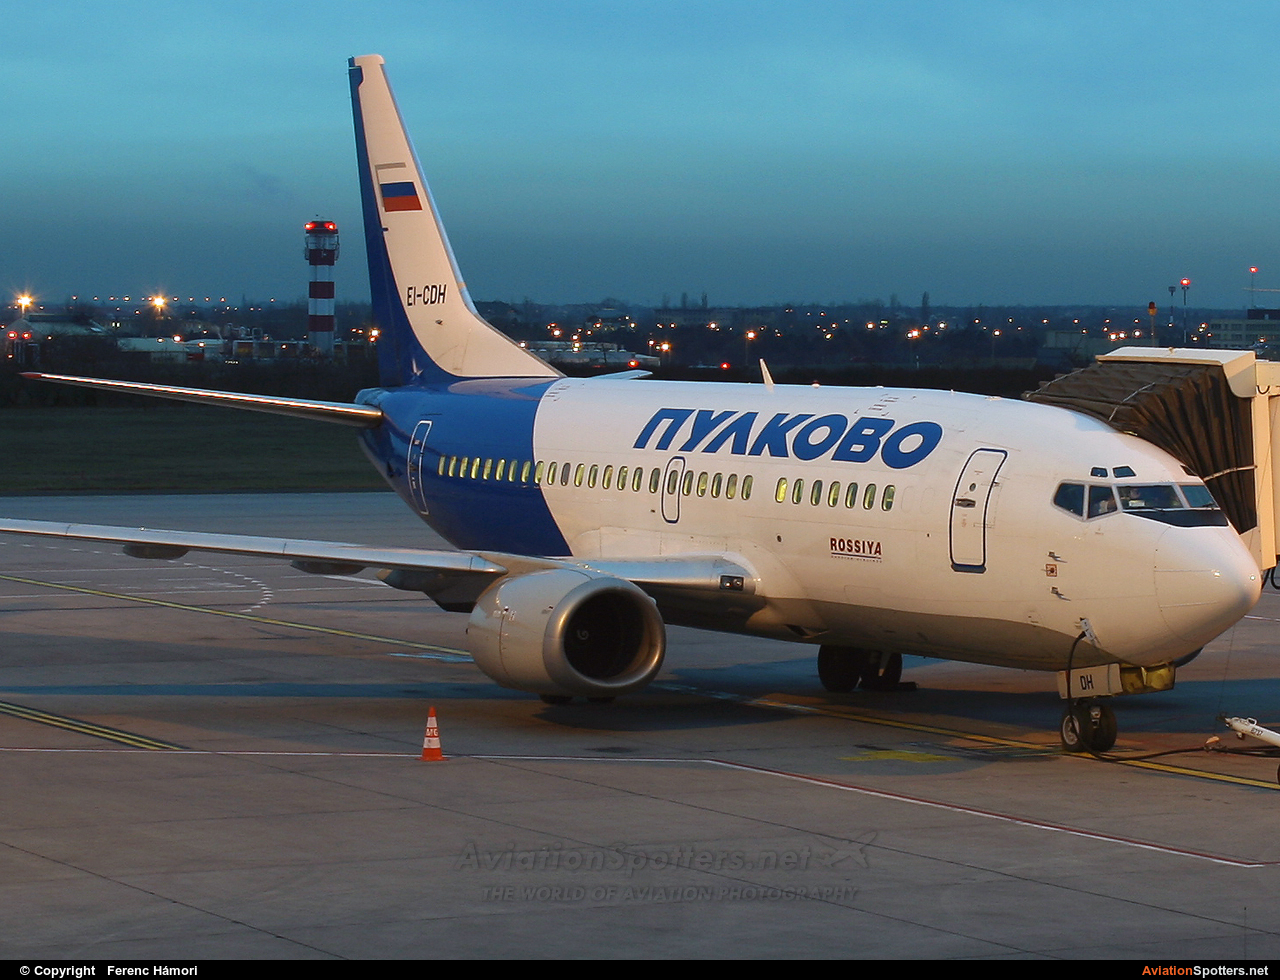 Pulkovo Airlines  -  737-500  (EI-CDH) By Ferenc Hámori (hamori)